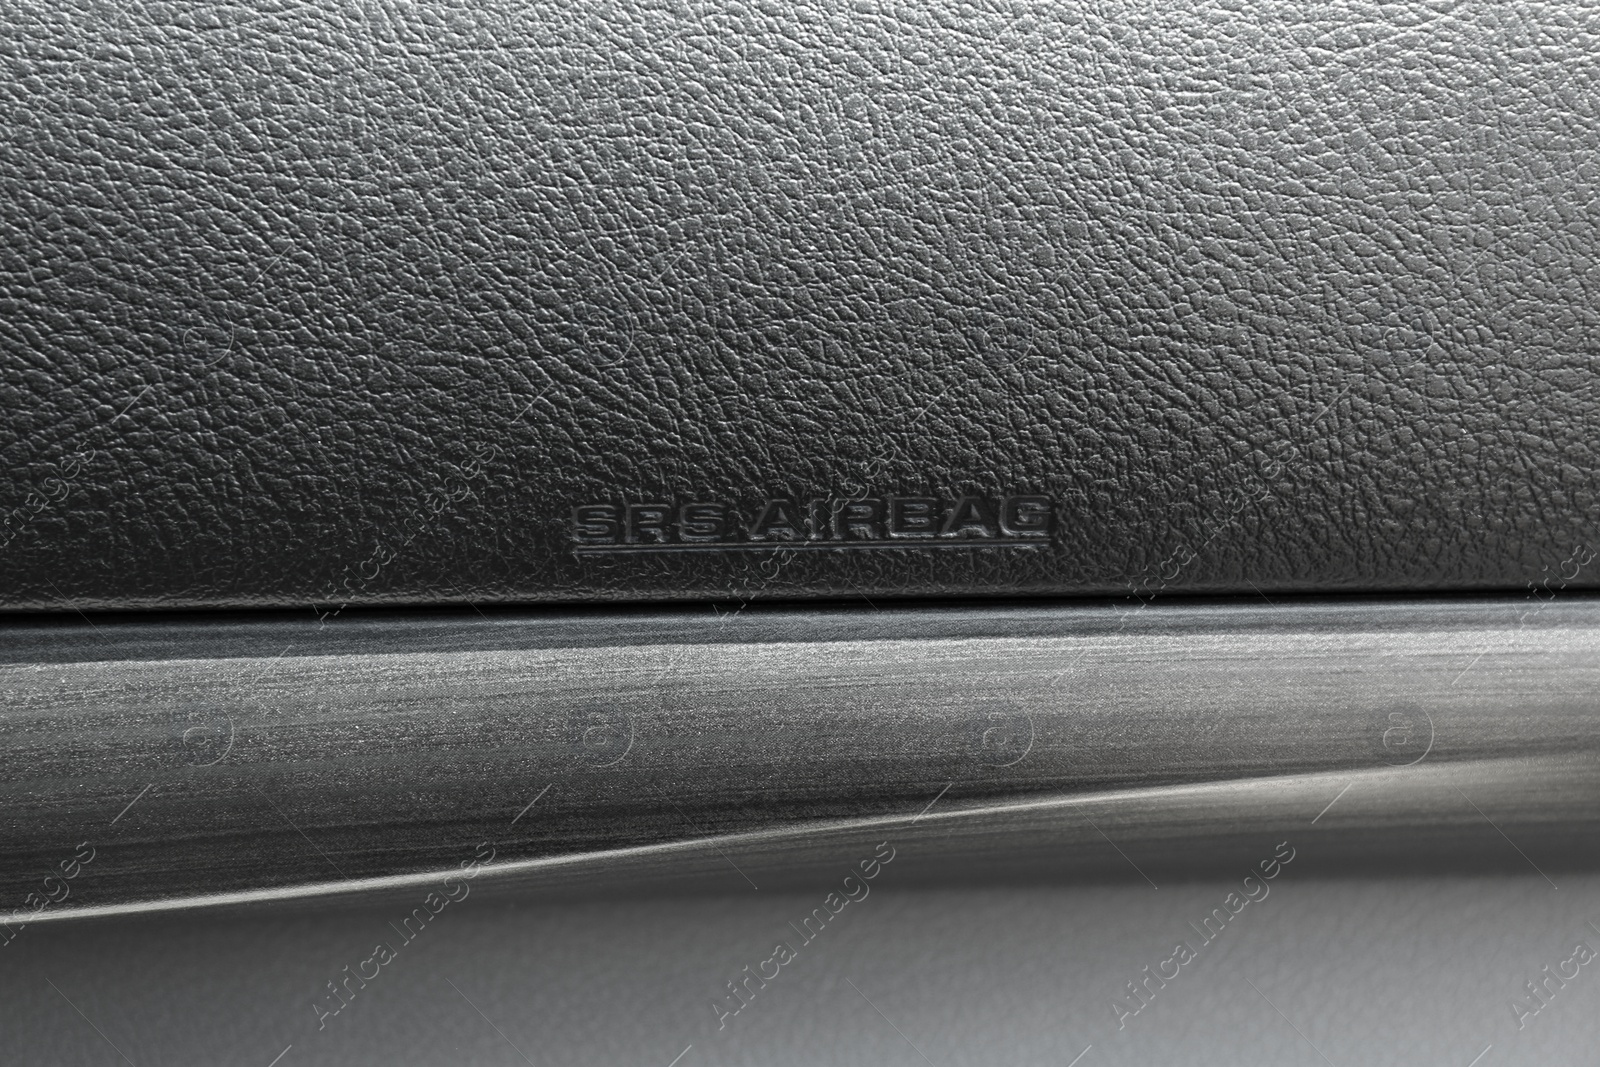 Photo of Passenger side airbag inside car, closeup view